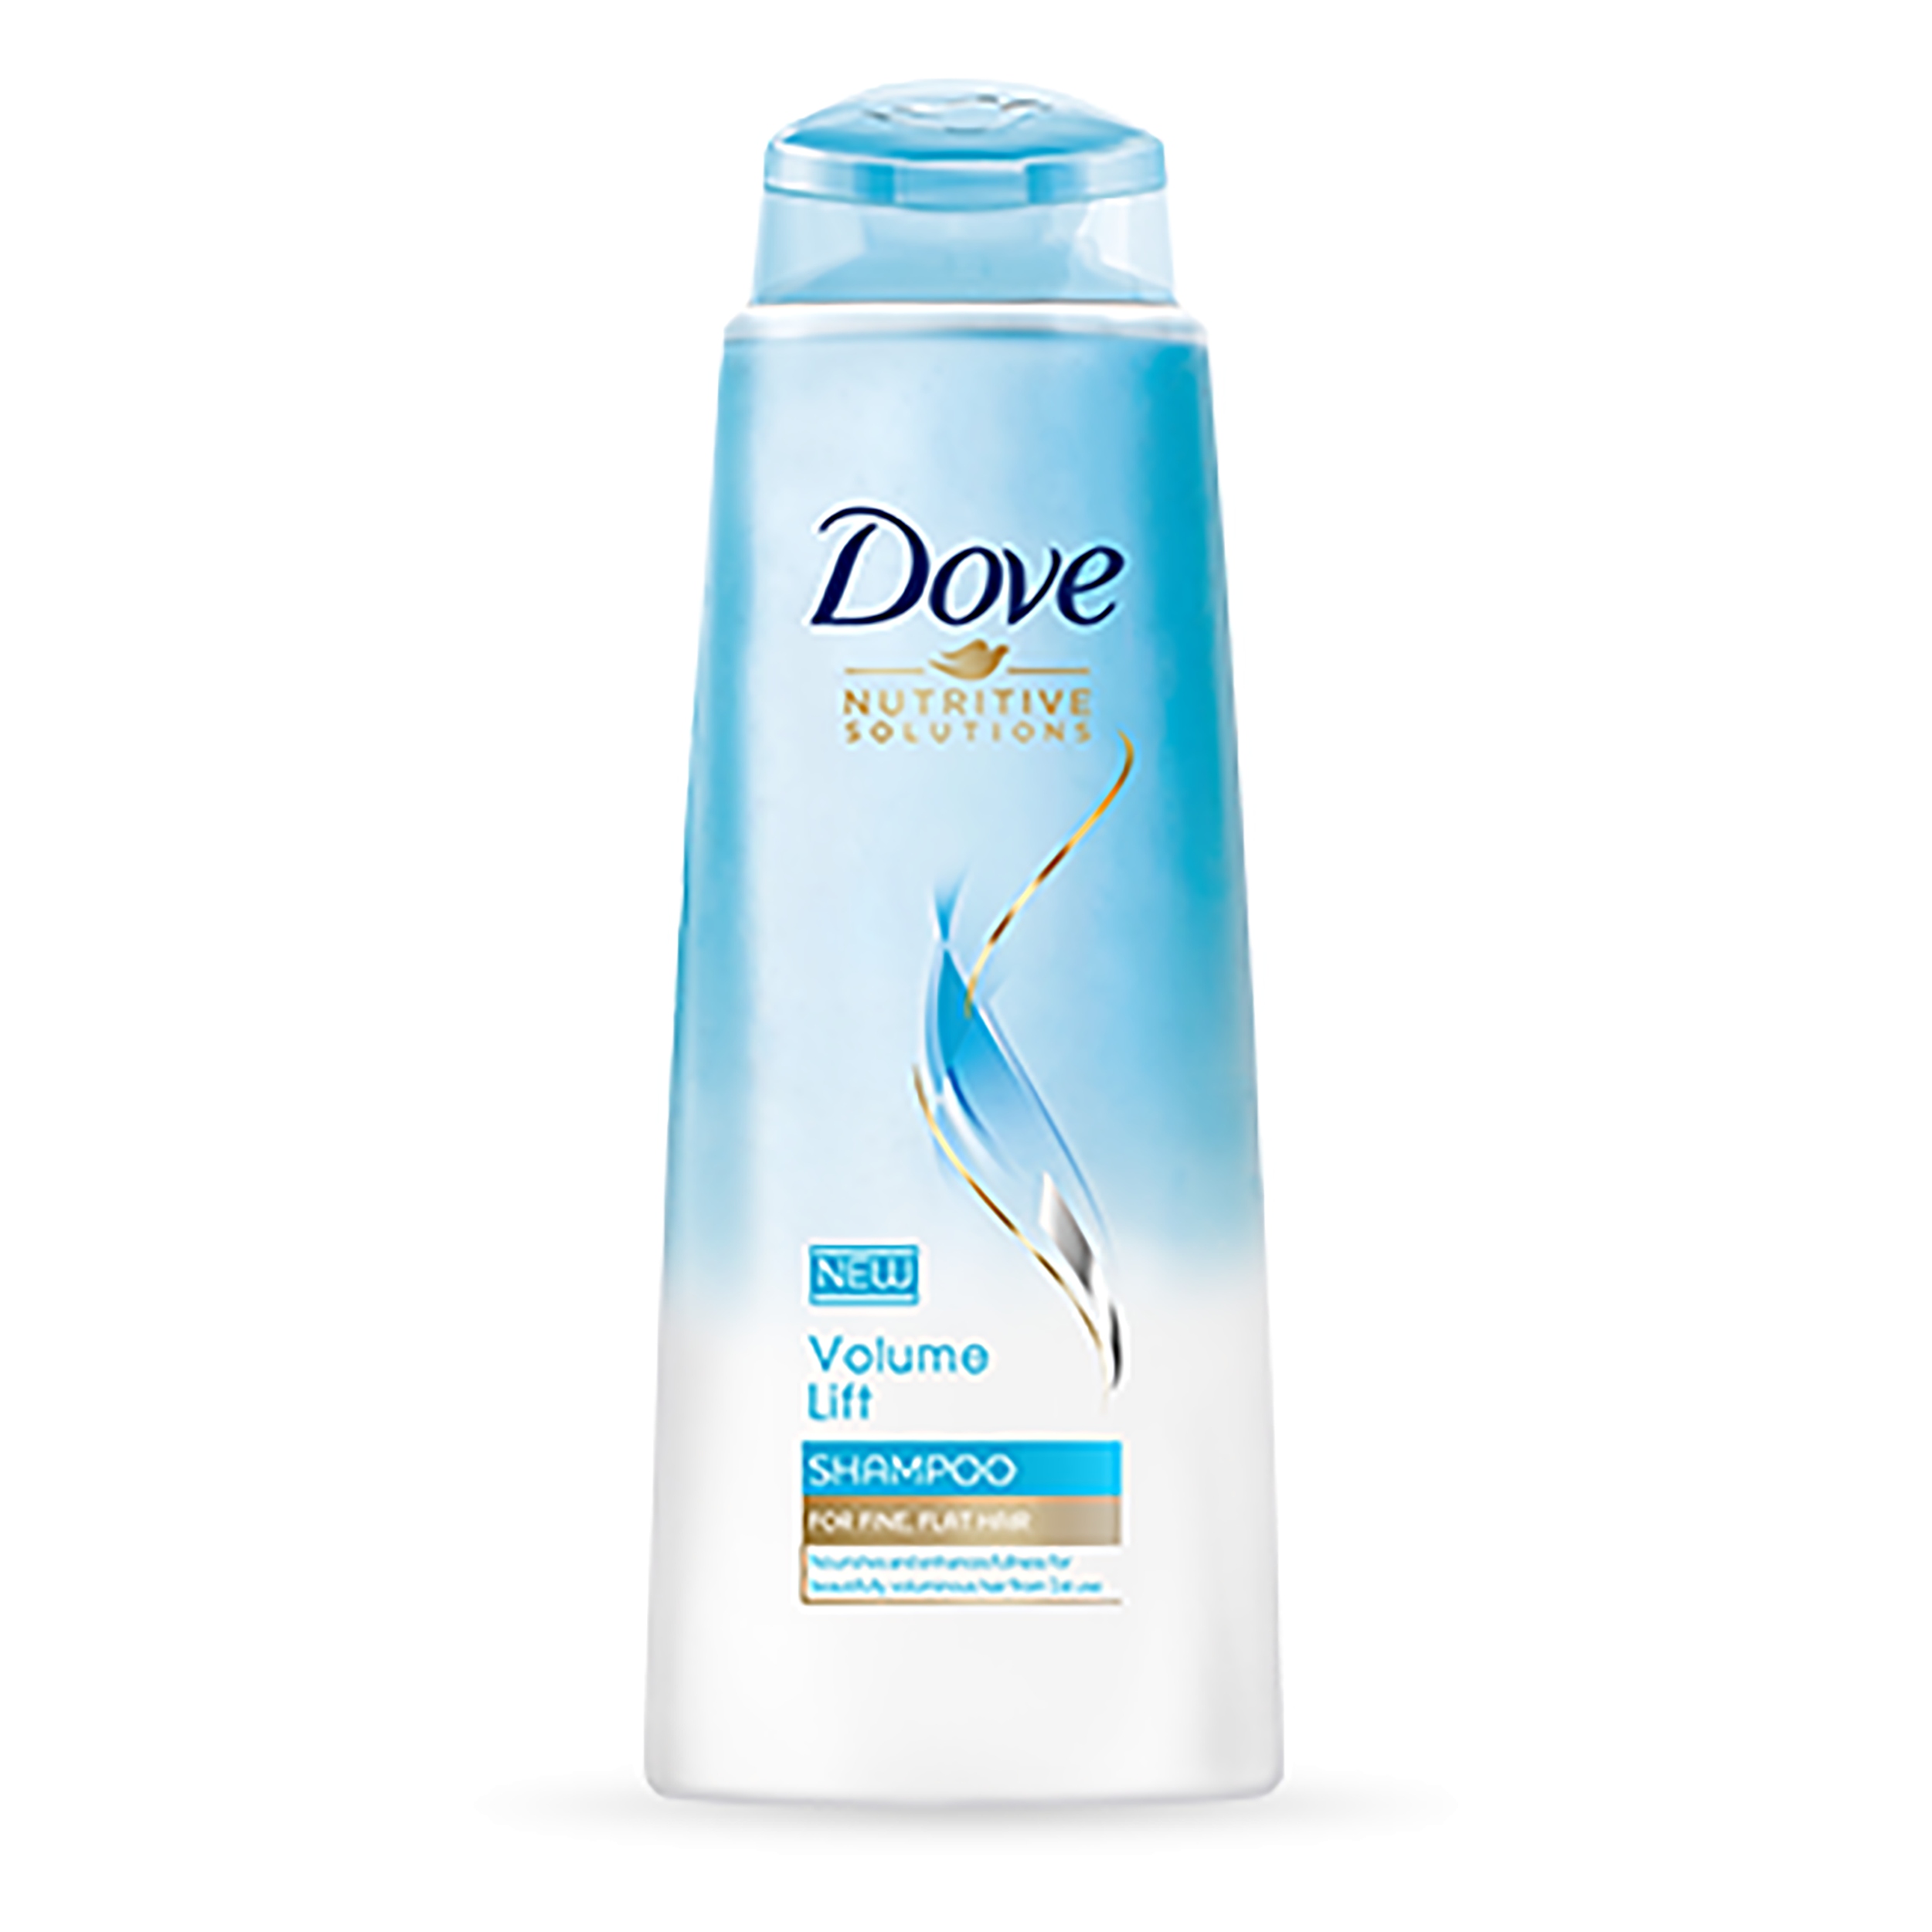 dove volume lift szampon